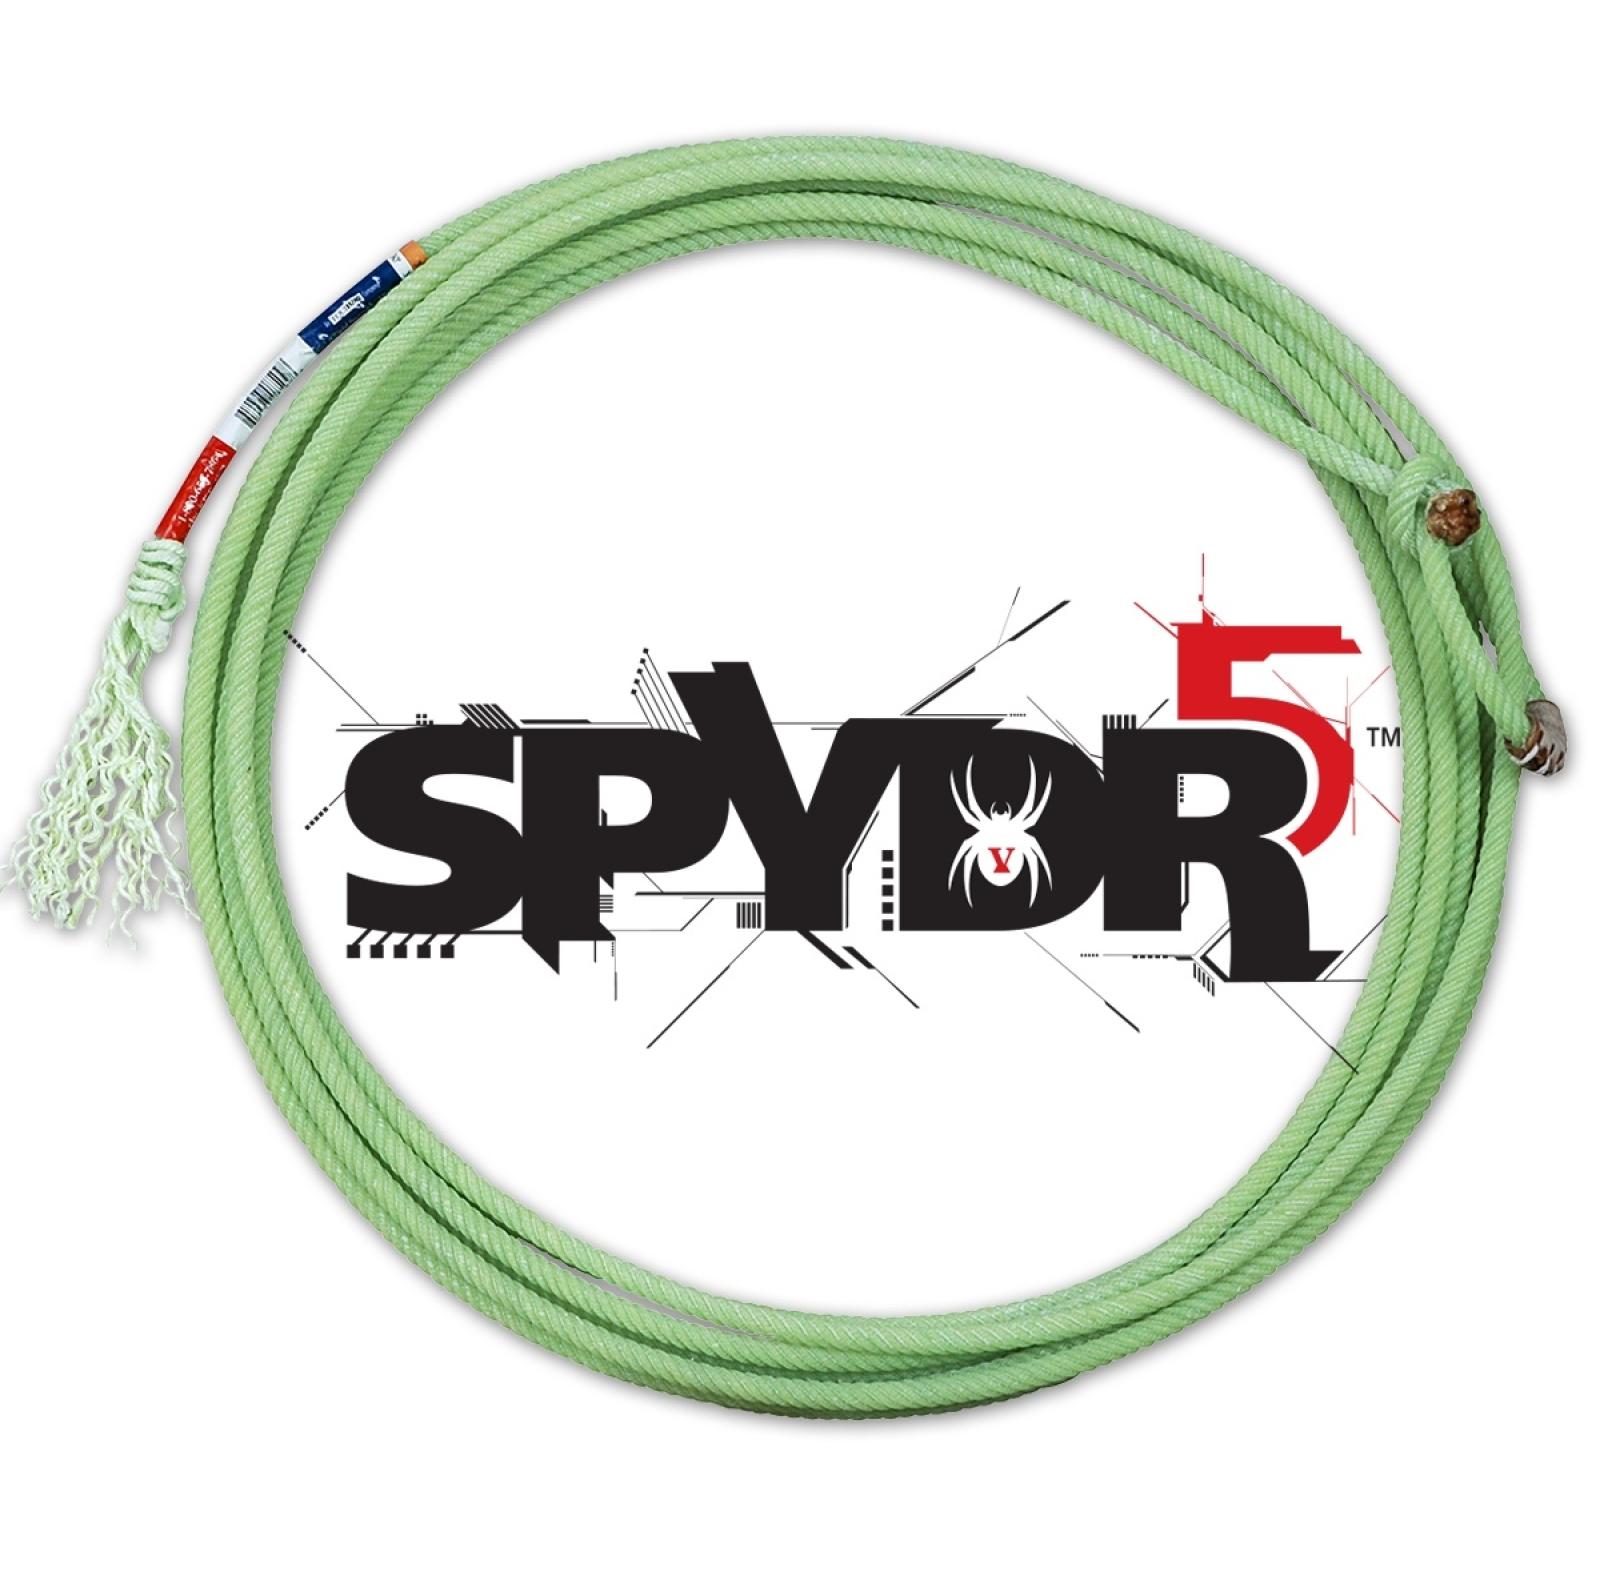 Classic Spydr5 35' Heel Rope